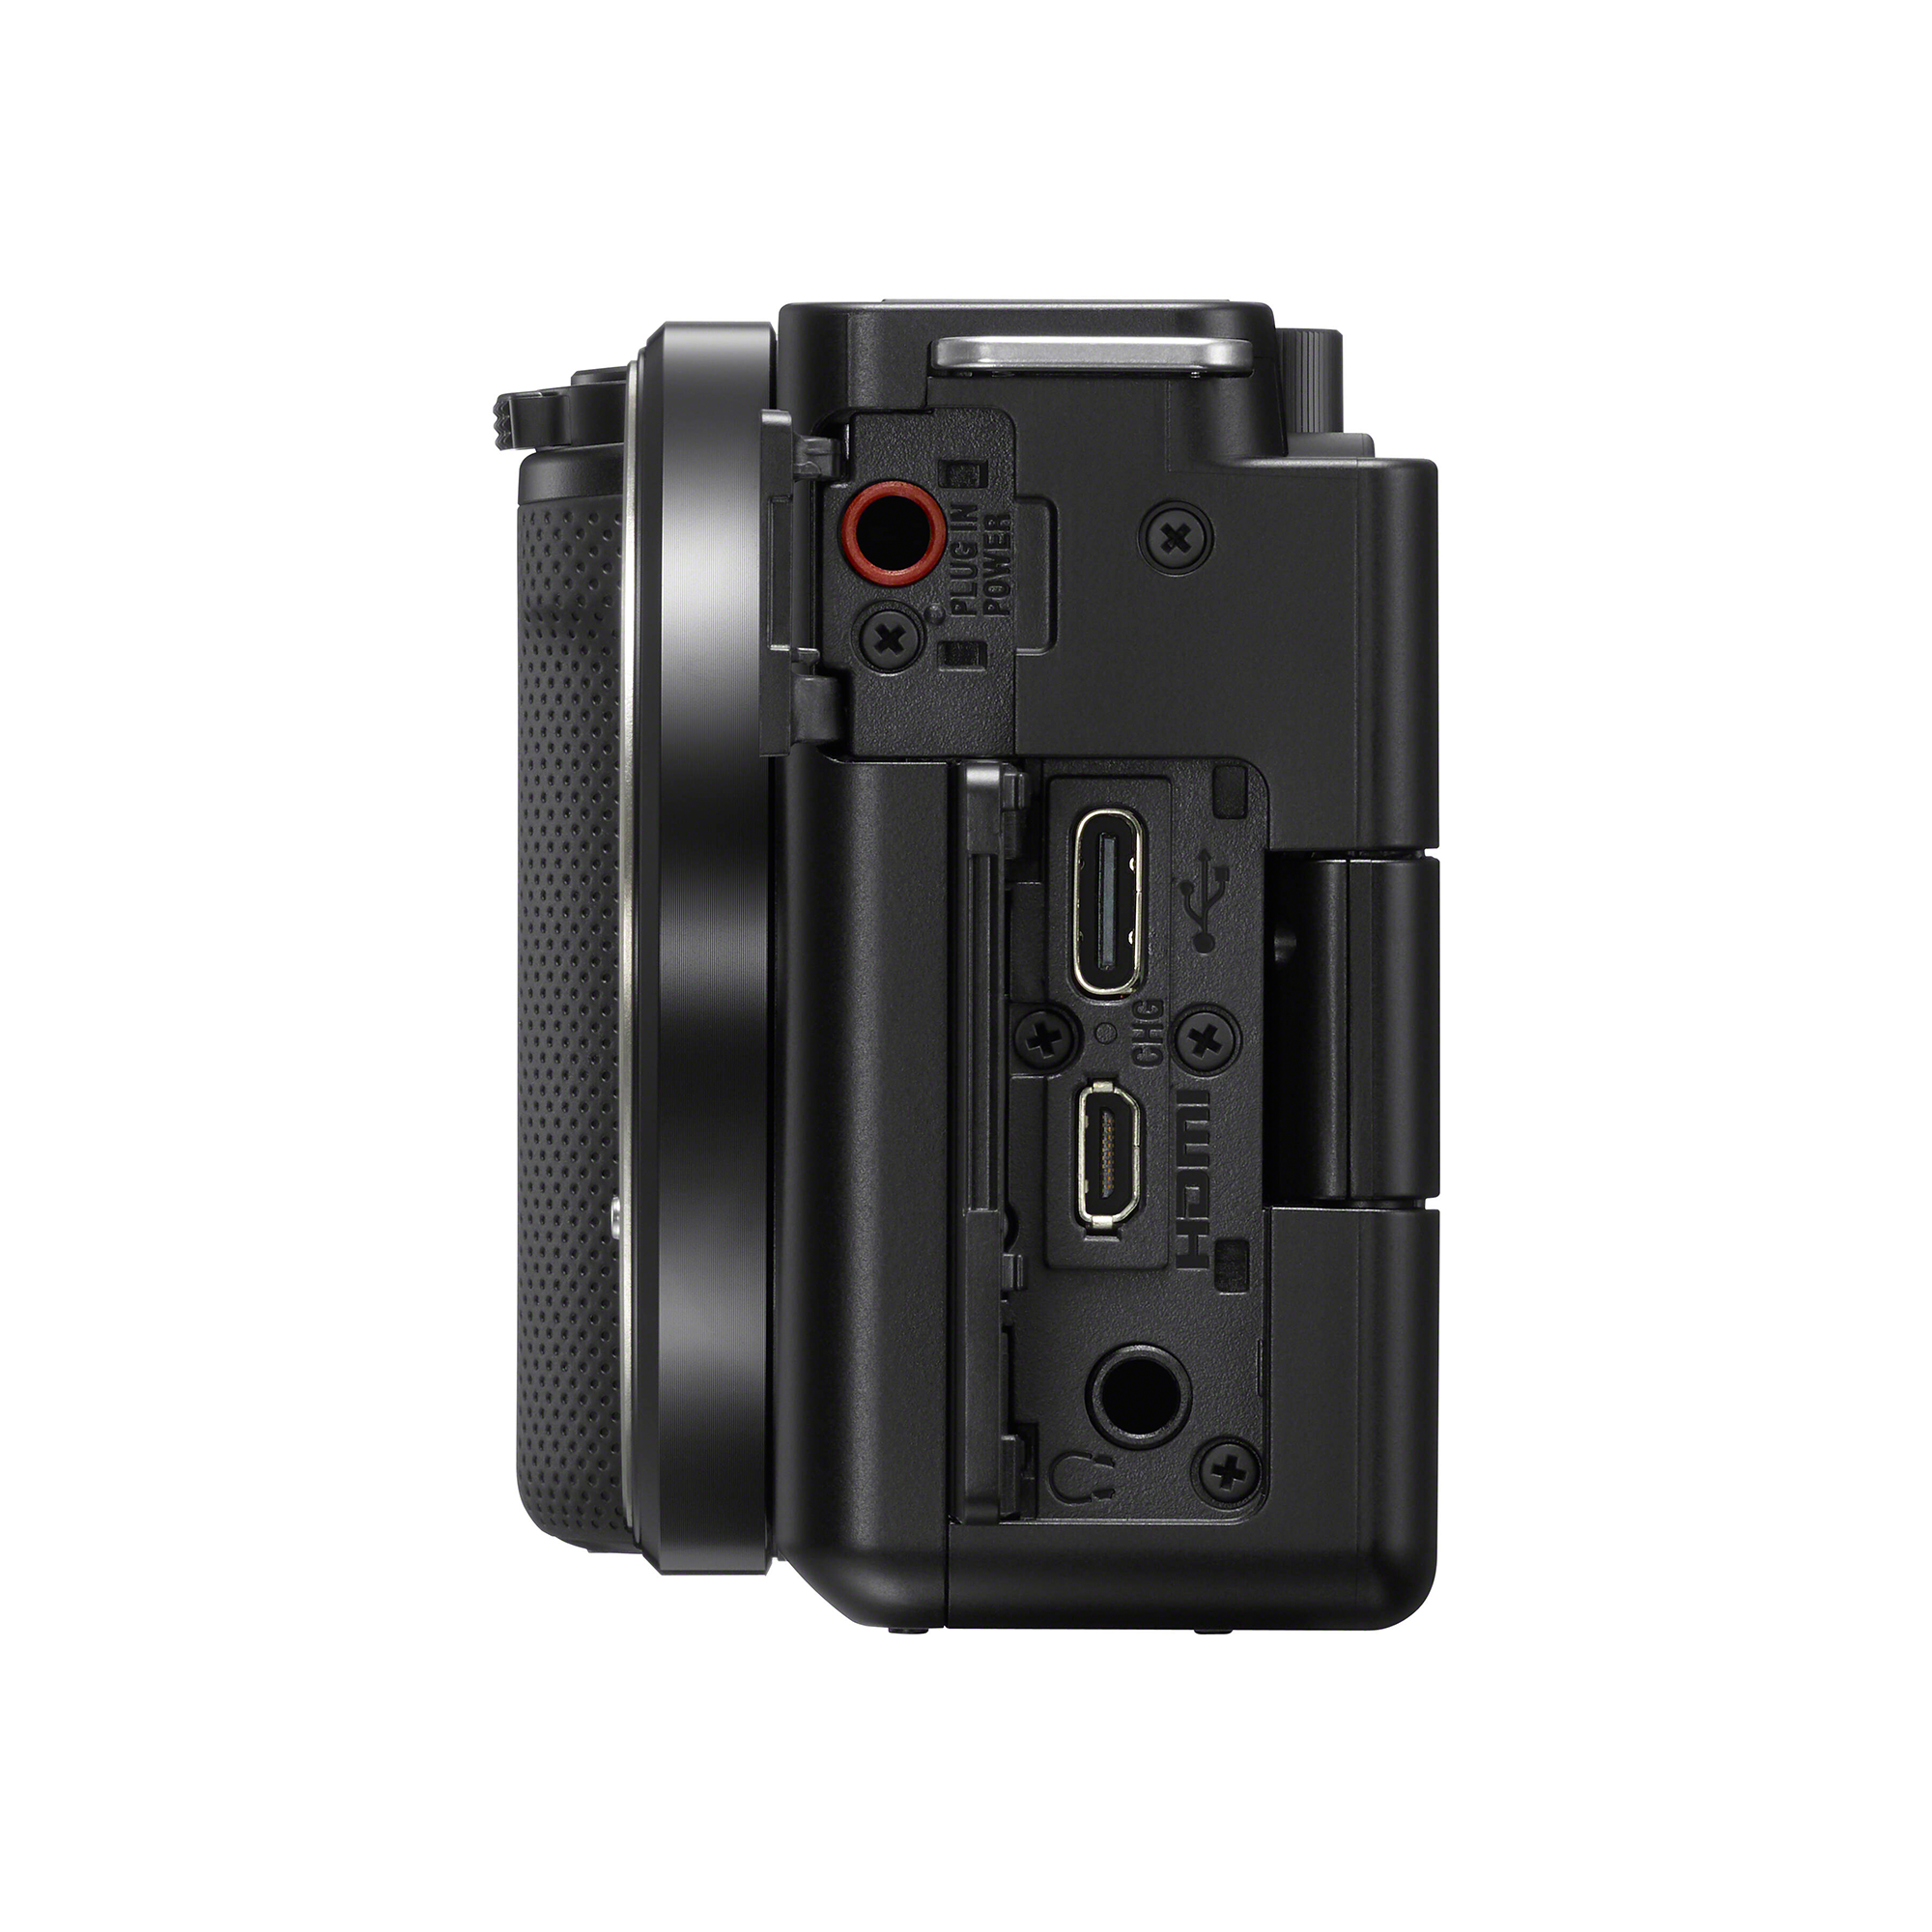 Sony Alpha ZV-E10 Mirrorless Camera with 16-50mm Lens (Black)